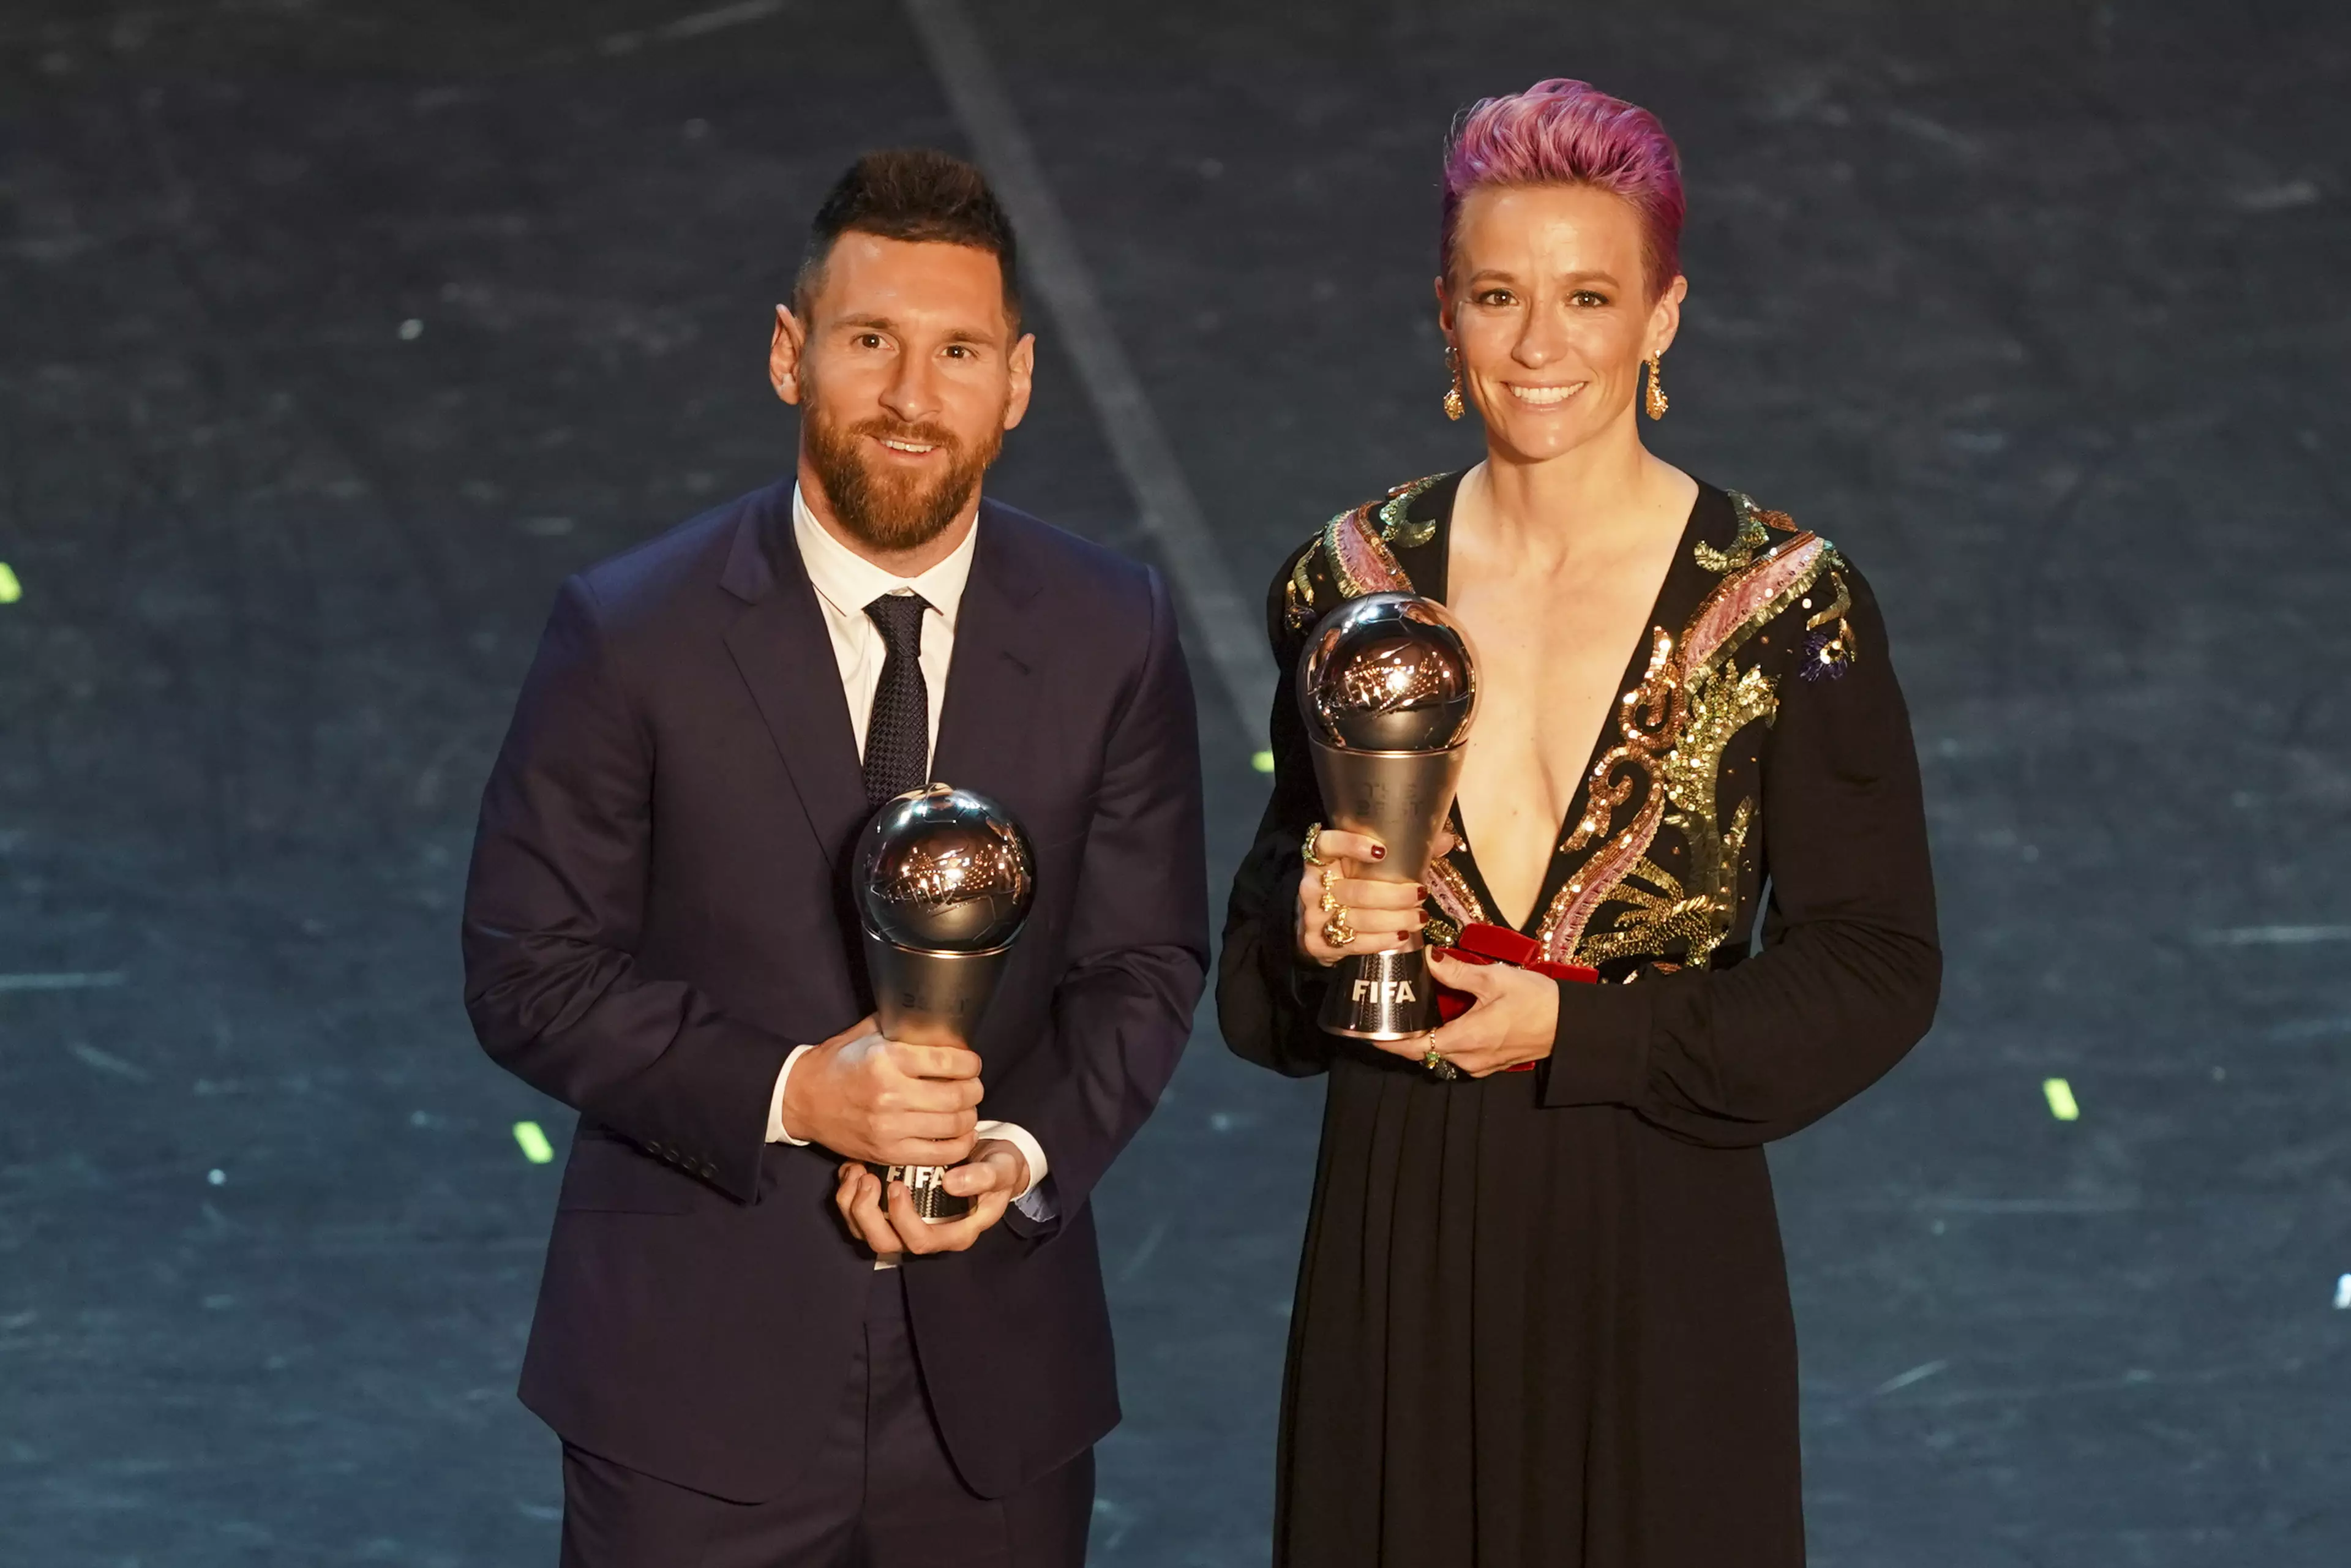 Messi with his FIFA award alongside women's winner Megan Rapinoe. Image: PA Images